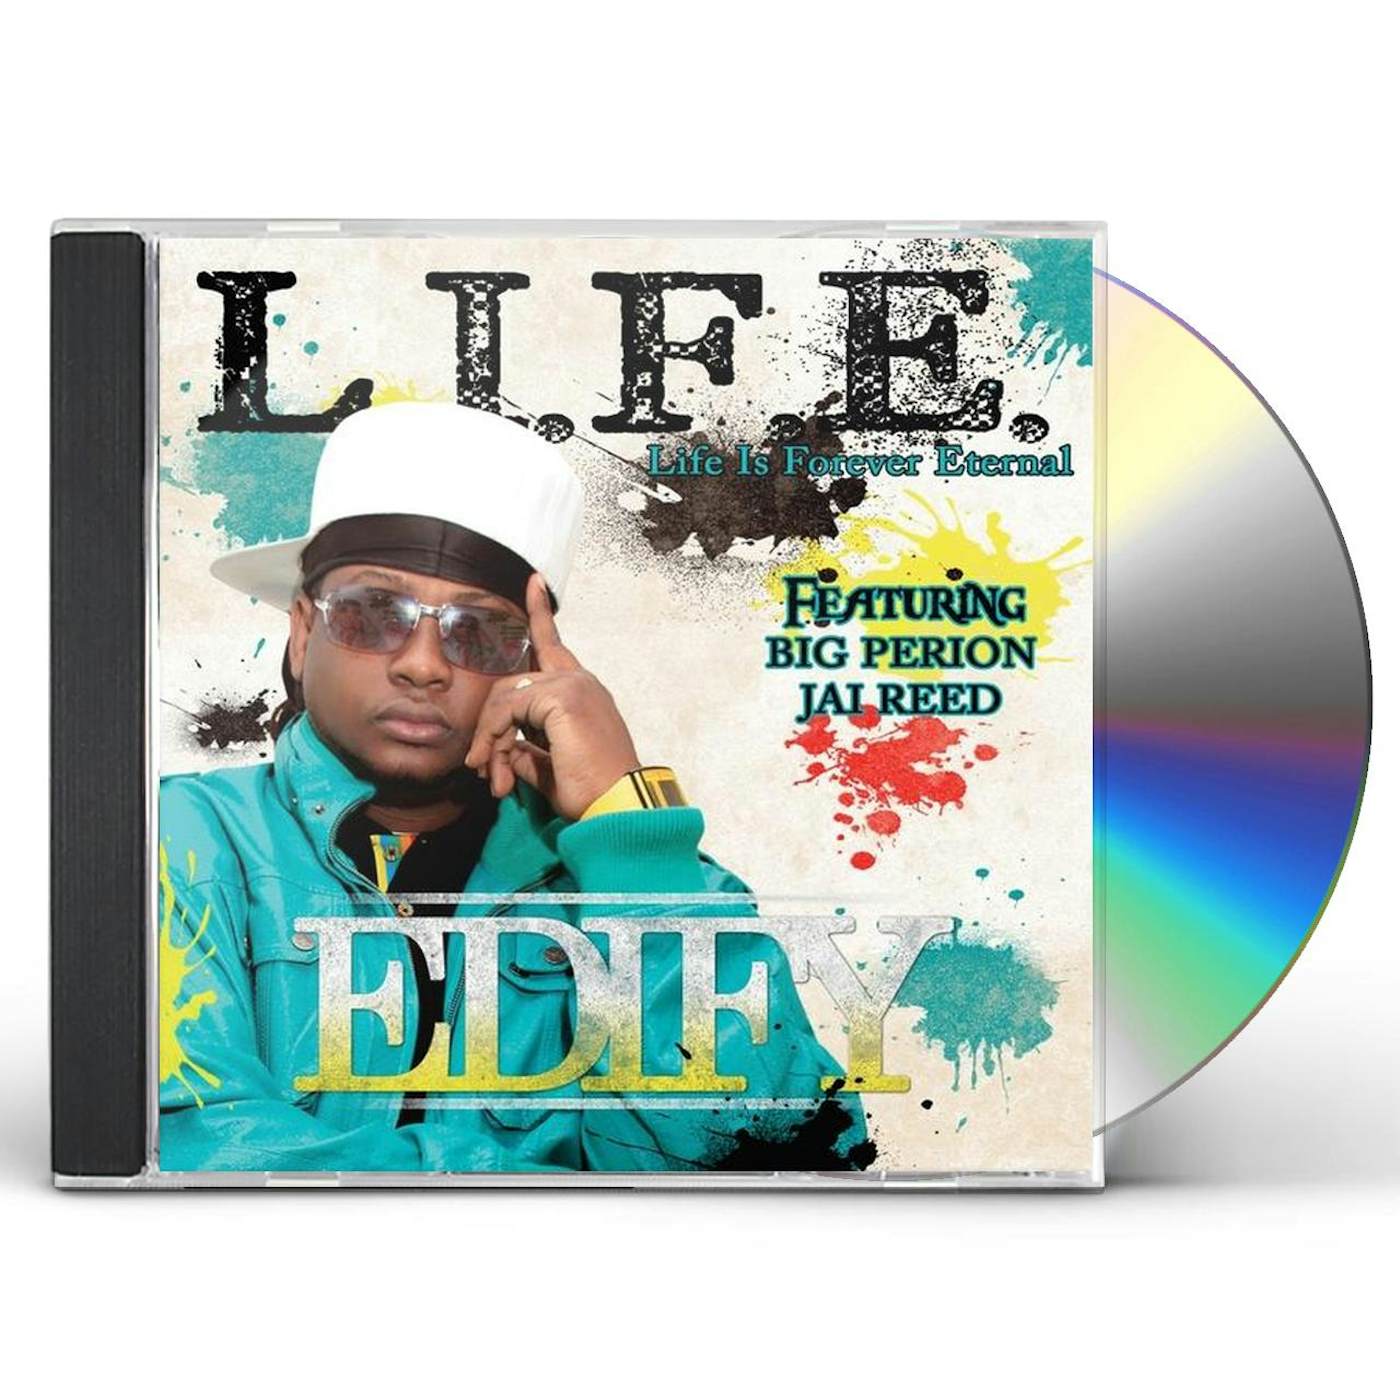 Edify LIFE CD